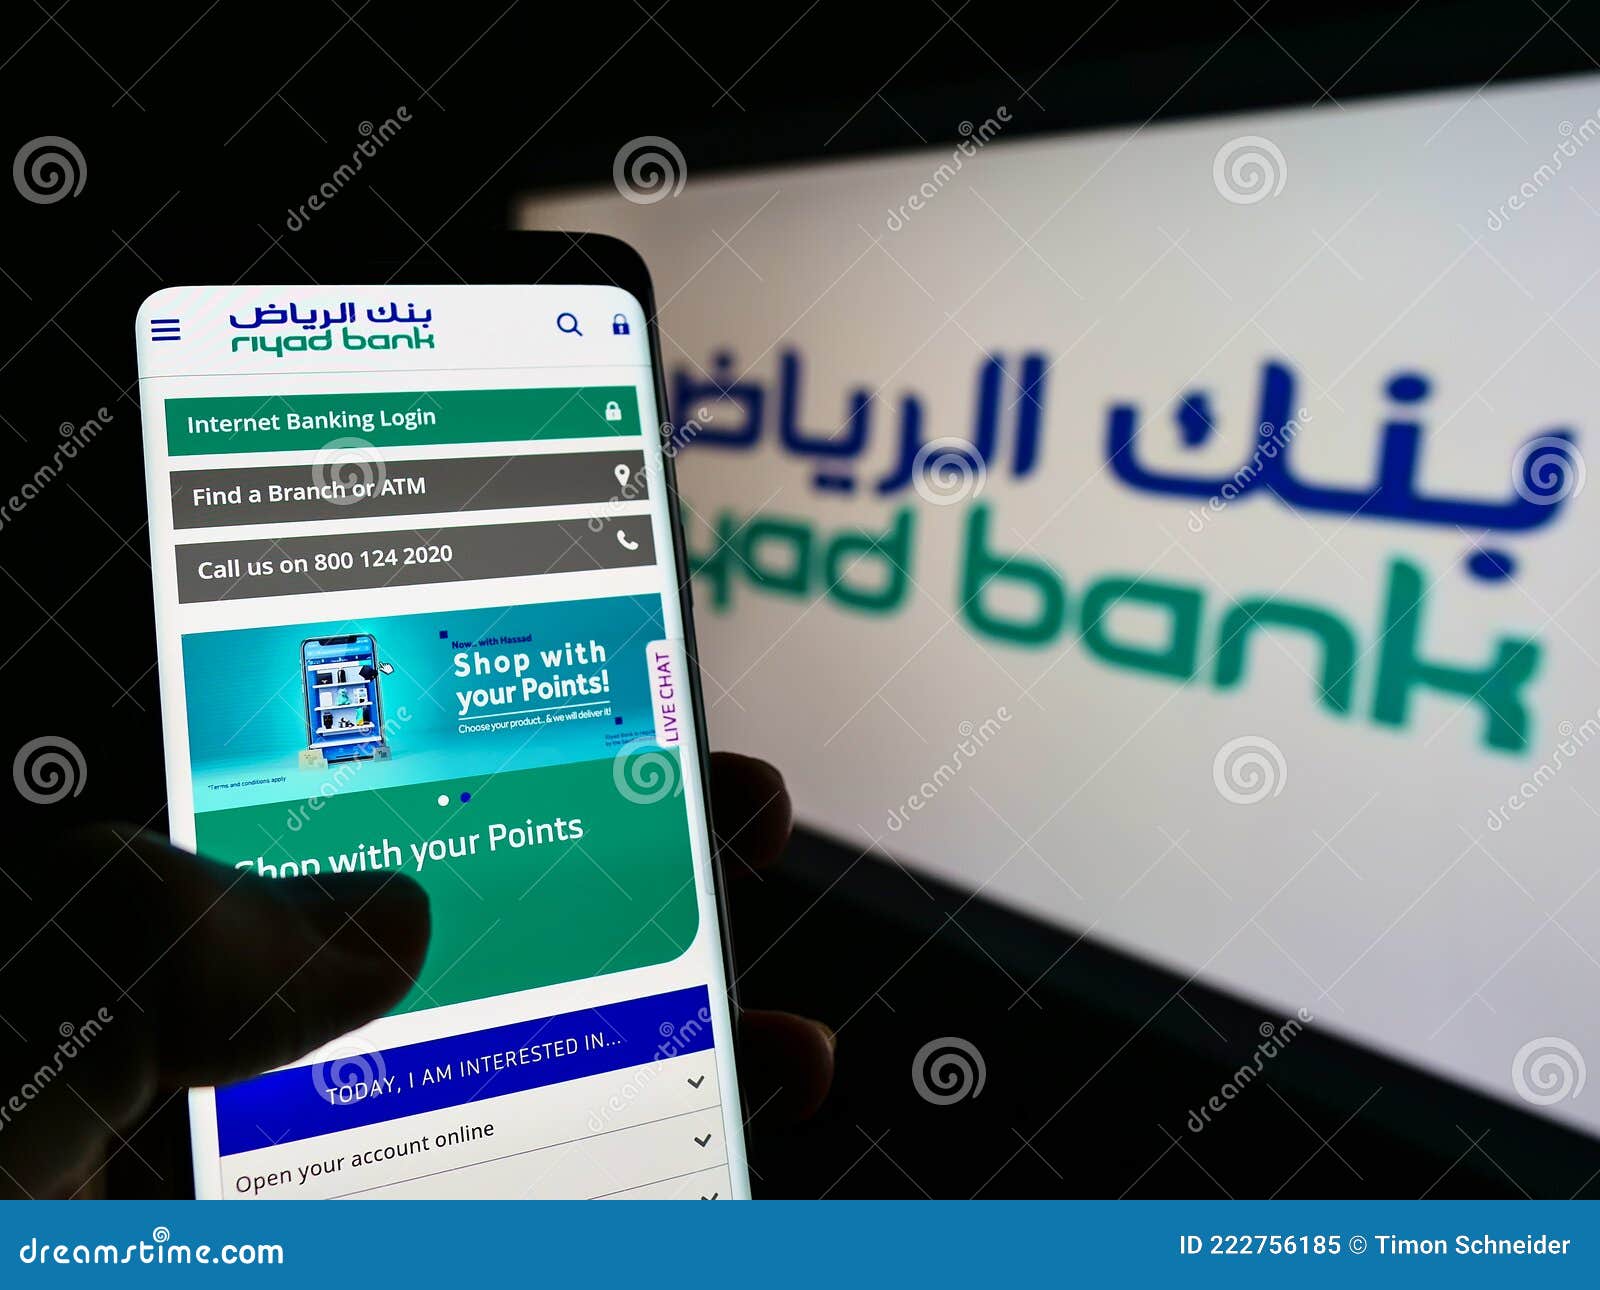 Riyad bank online account update